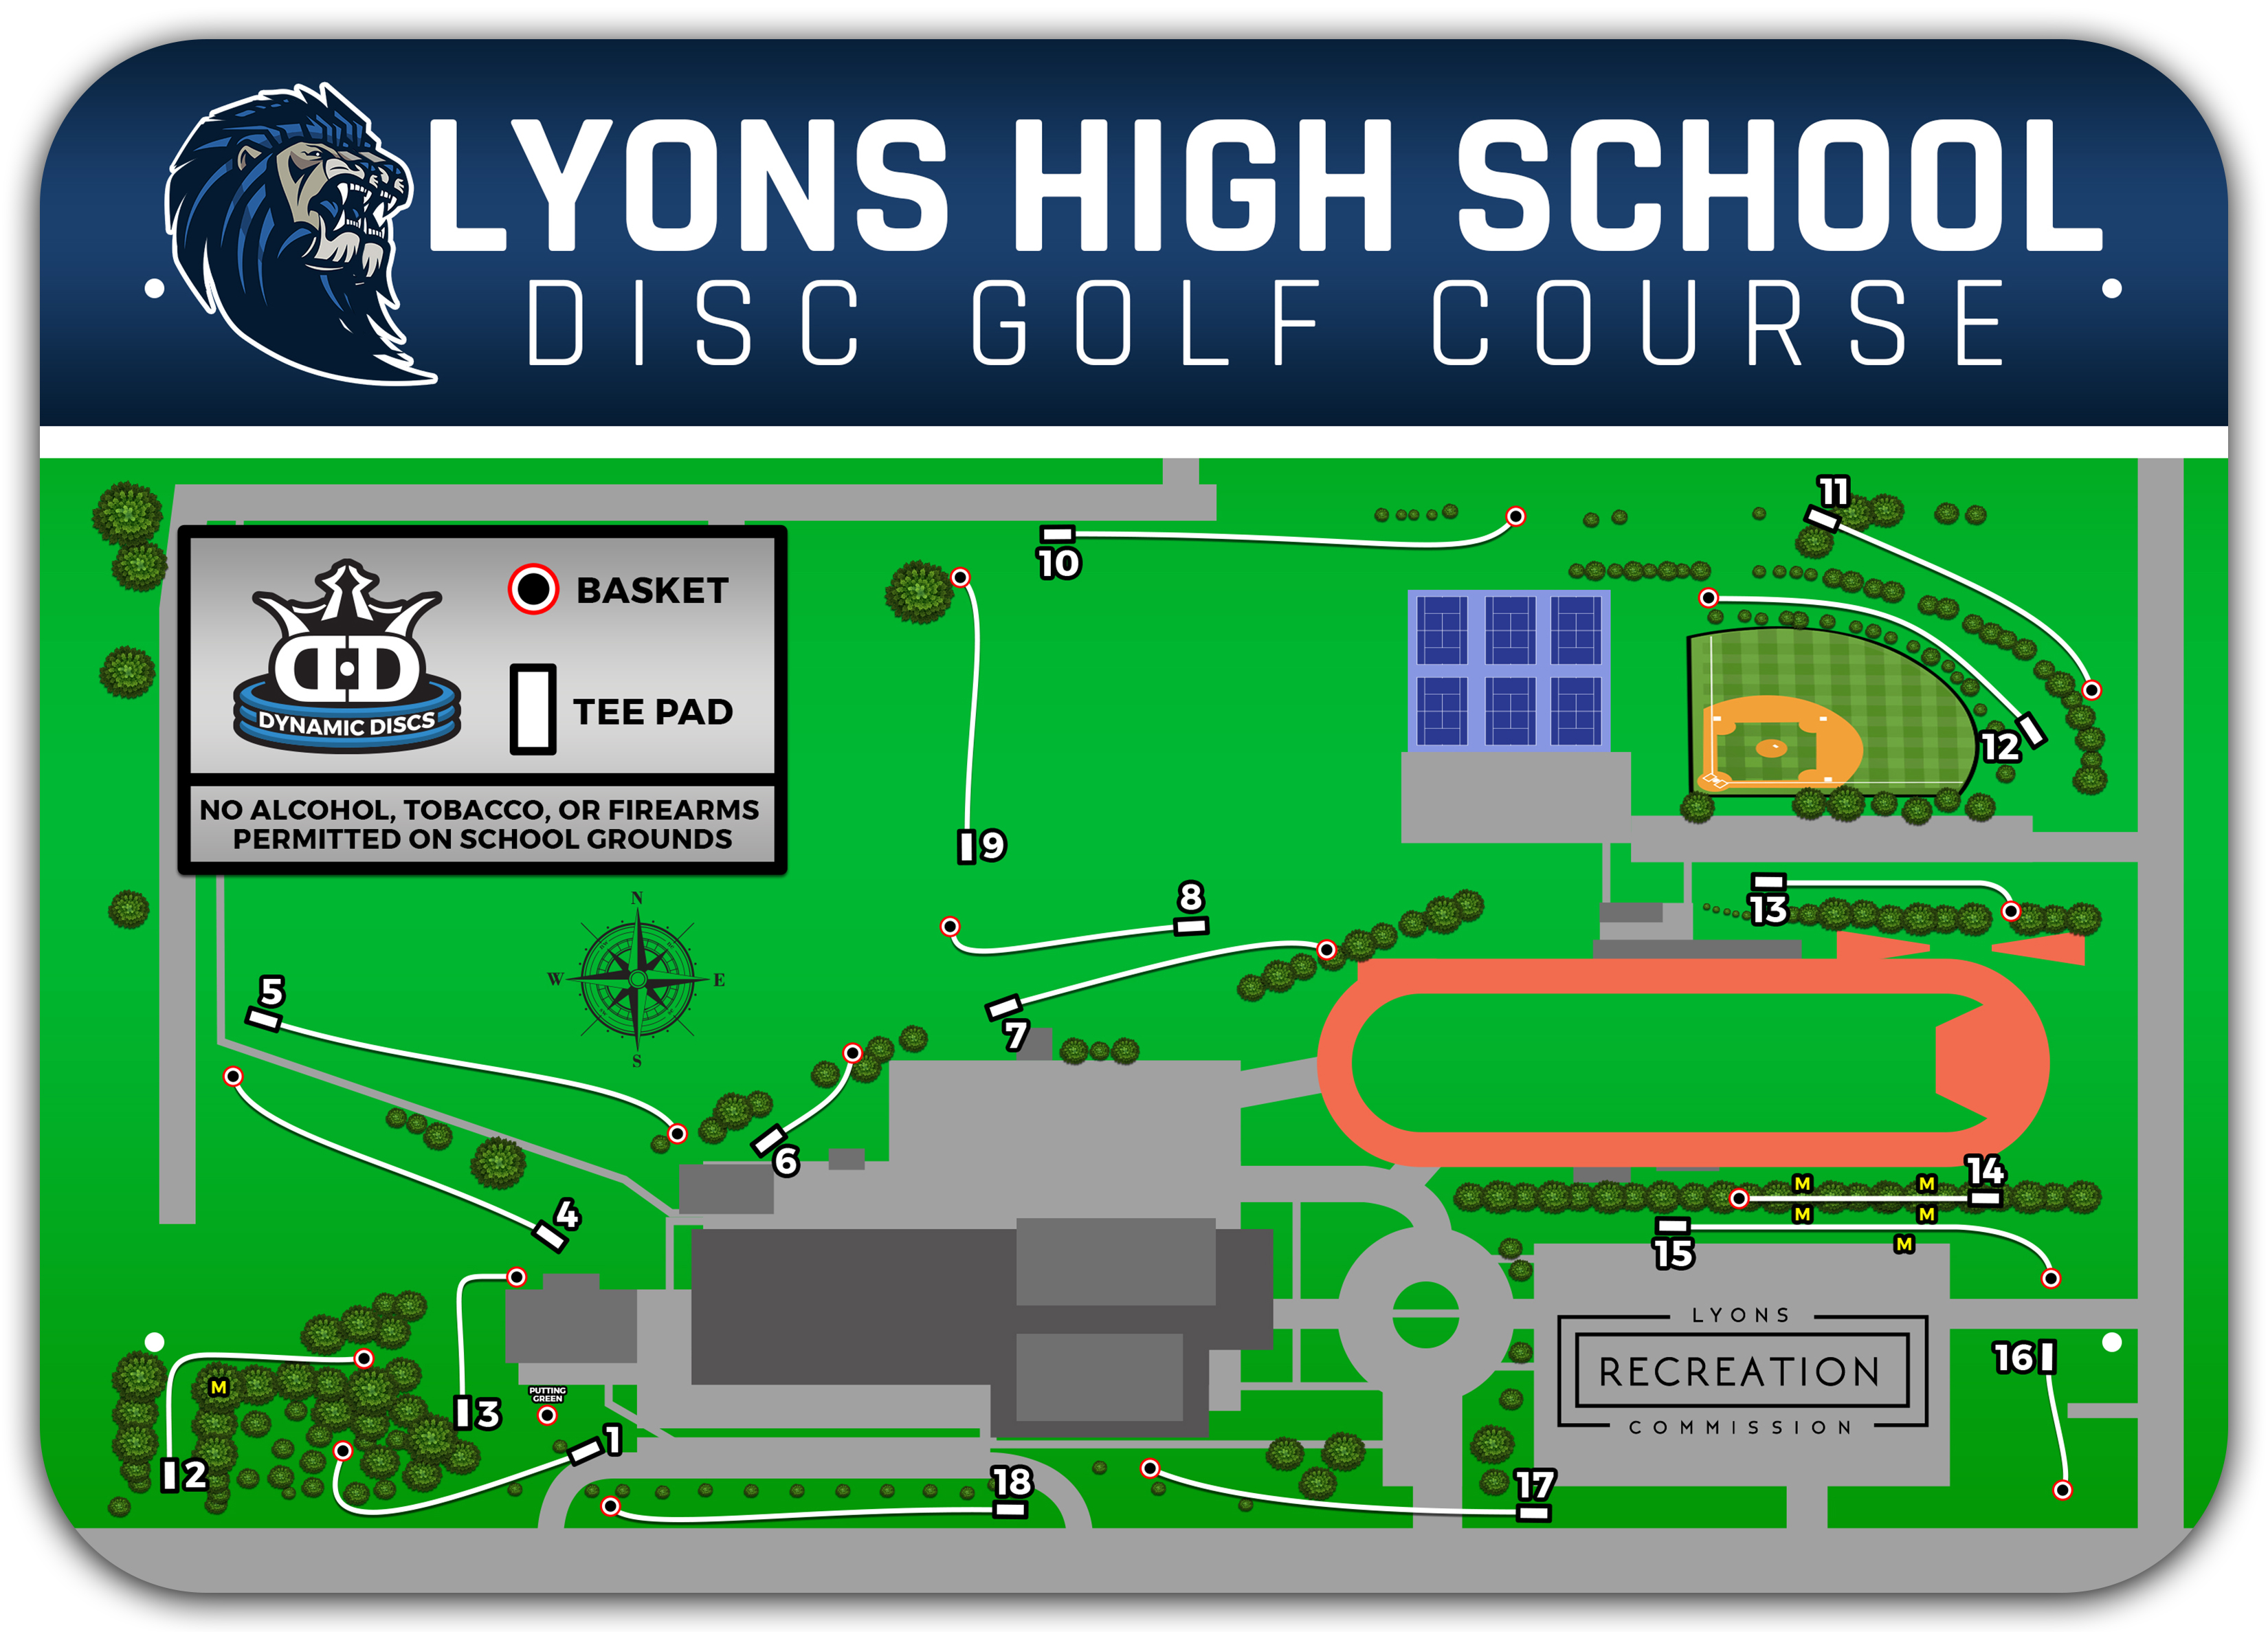 Lyons High School DISC Golf Course